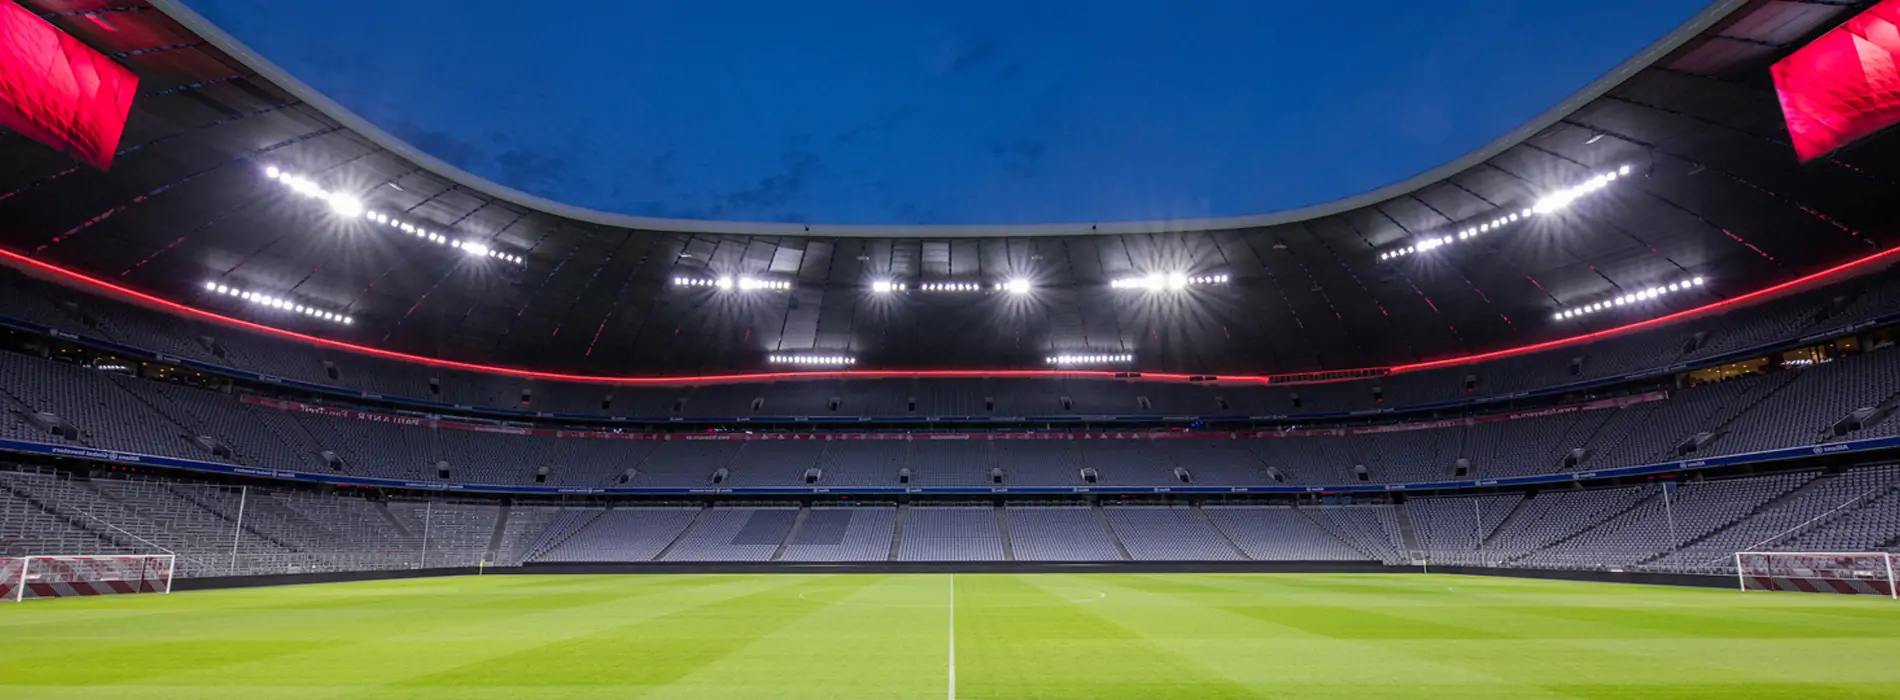 iluminación led para estadios